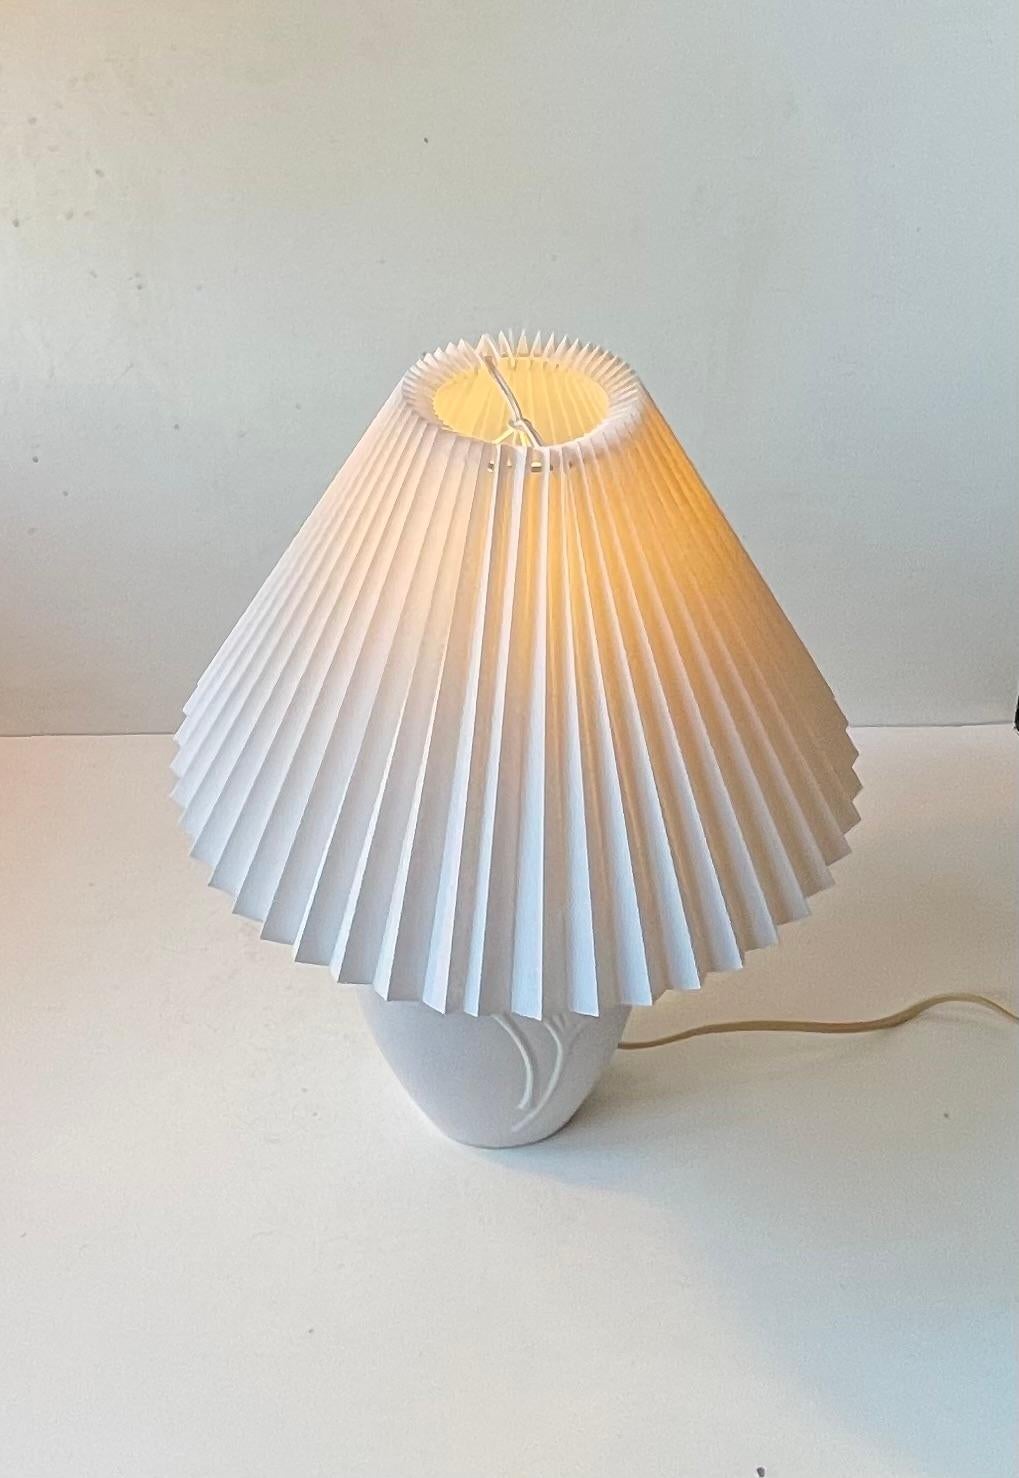 Danish Art Deco Revival White Ceramic Table Lamp from Søholm For Sale